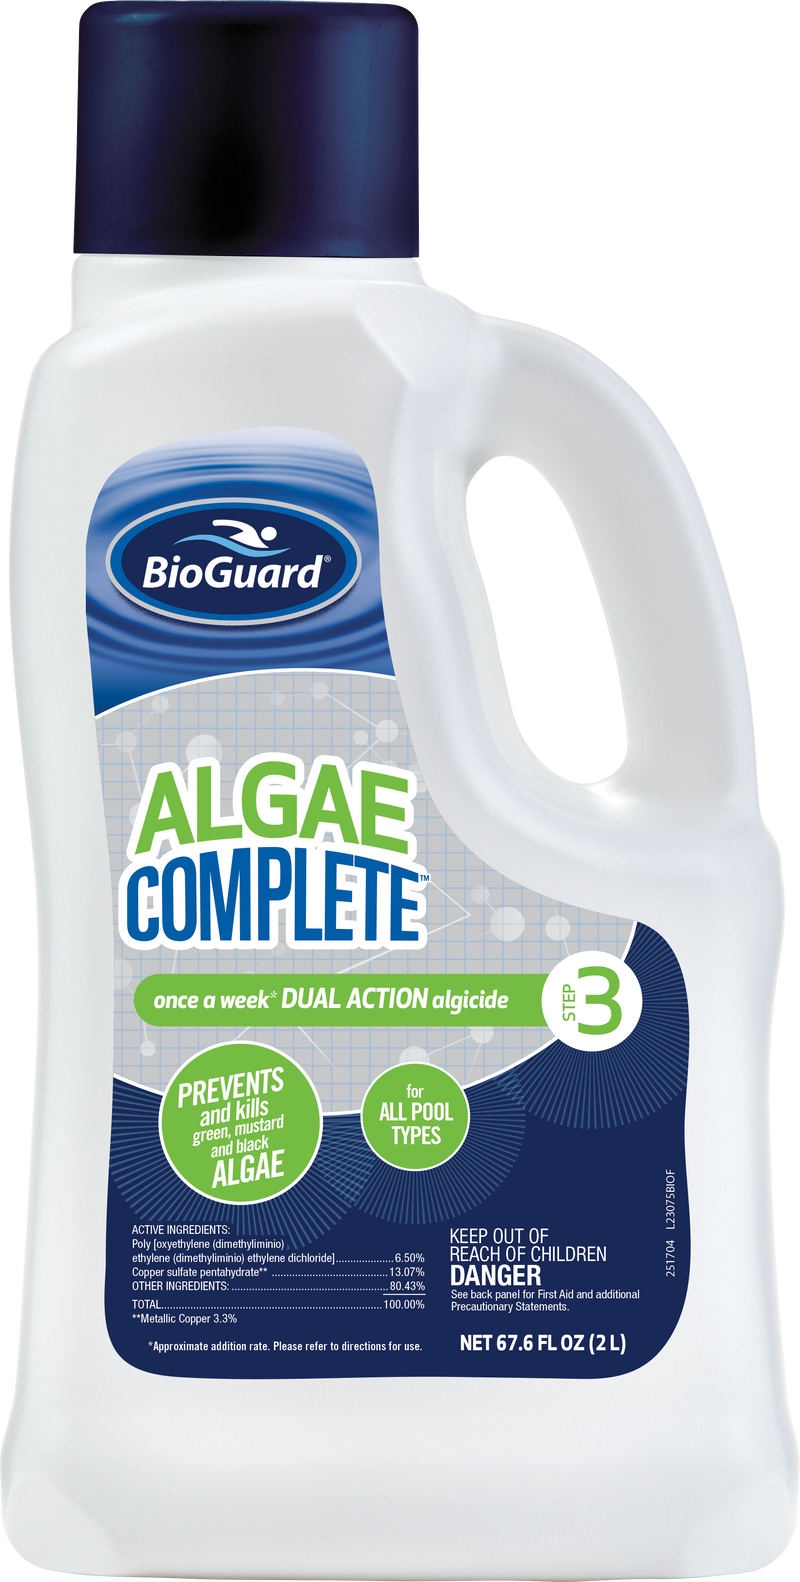 BioGuard Algae Complete Algae Complete is an extremely efficient rapid working algae eliminator.